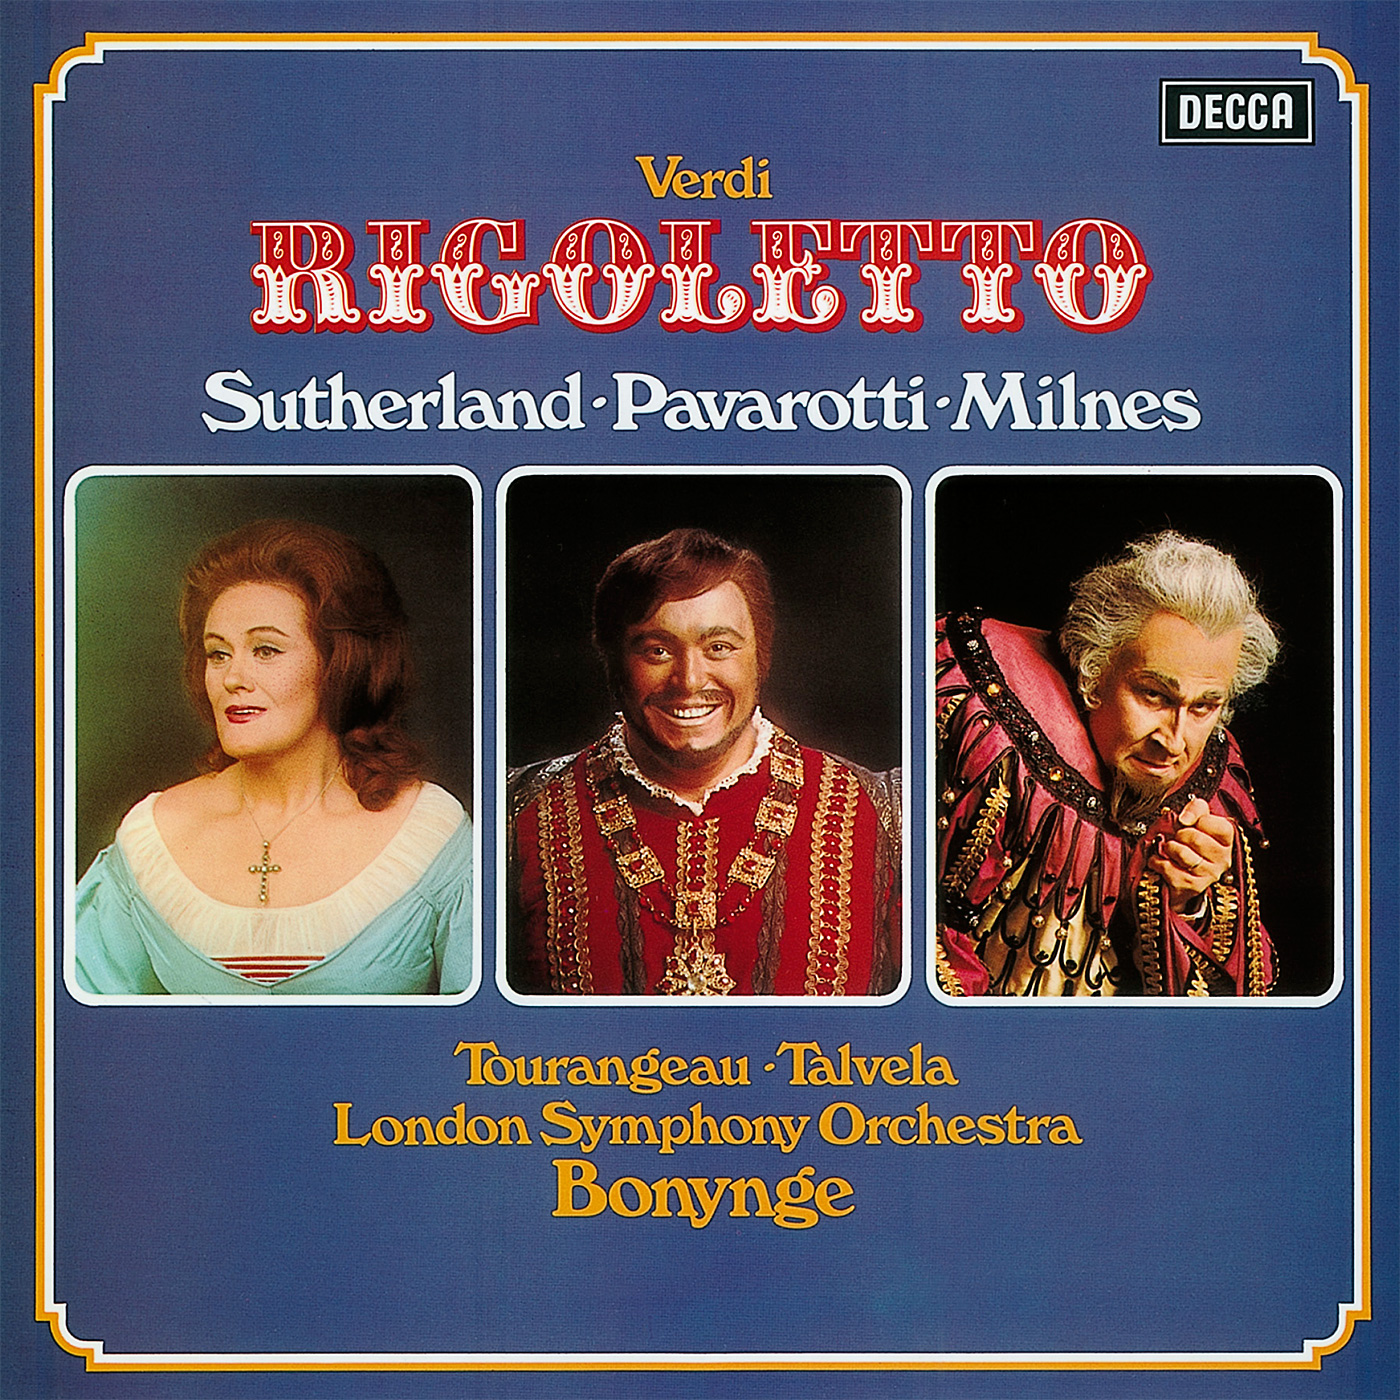 Joan Sutherland, Luciano Pavarotti, Sherrill Milnes - Verdi: Rigoletto (1971/2014) [PrestoClassical FLAC 24bit/96kHz]